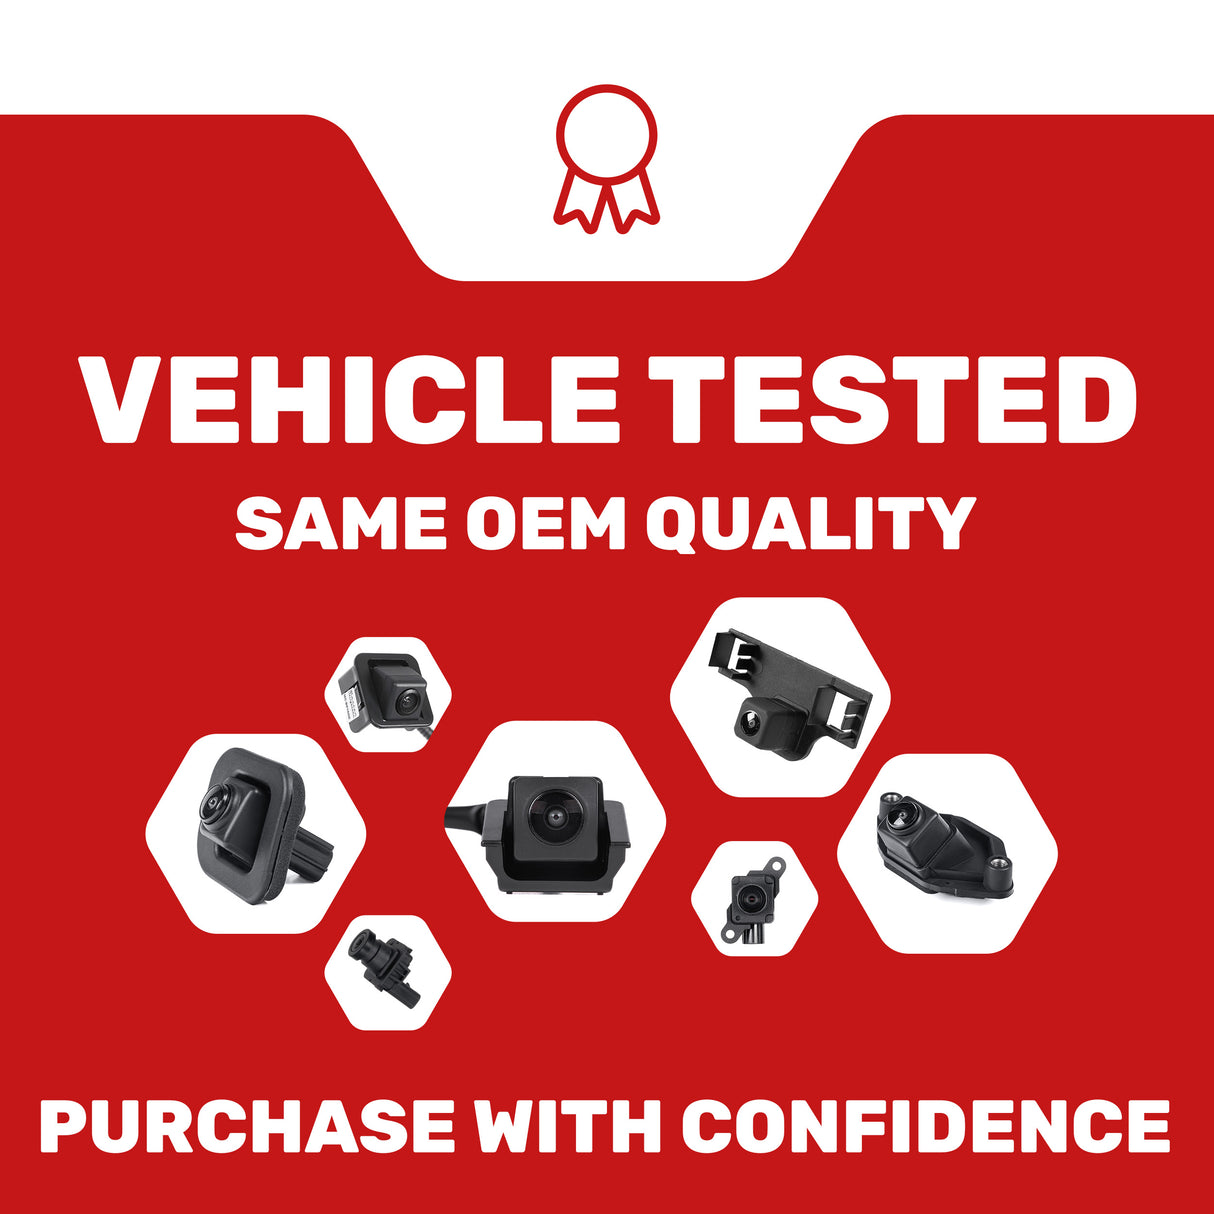 Chevrolet Silverado / GMC Sierra (2014-2015) OEM Replacement Backup Camera OE Part # 23306741, 22803702